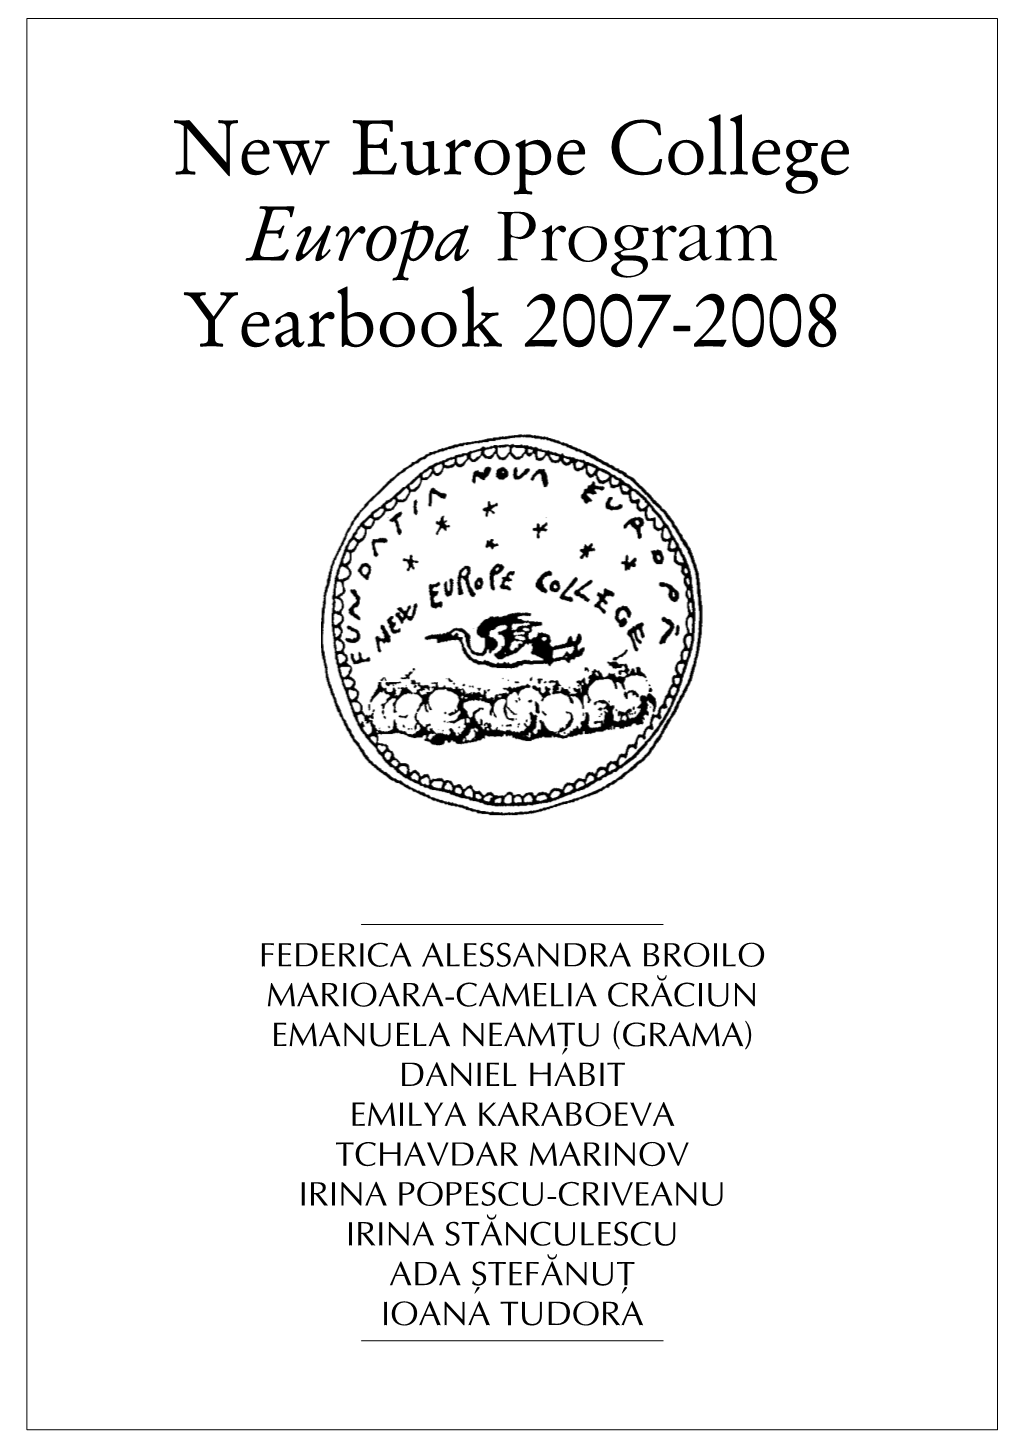 New Europe College Europa Program Yearbook 2007-2008